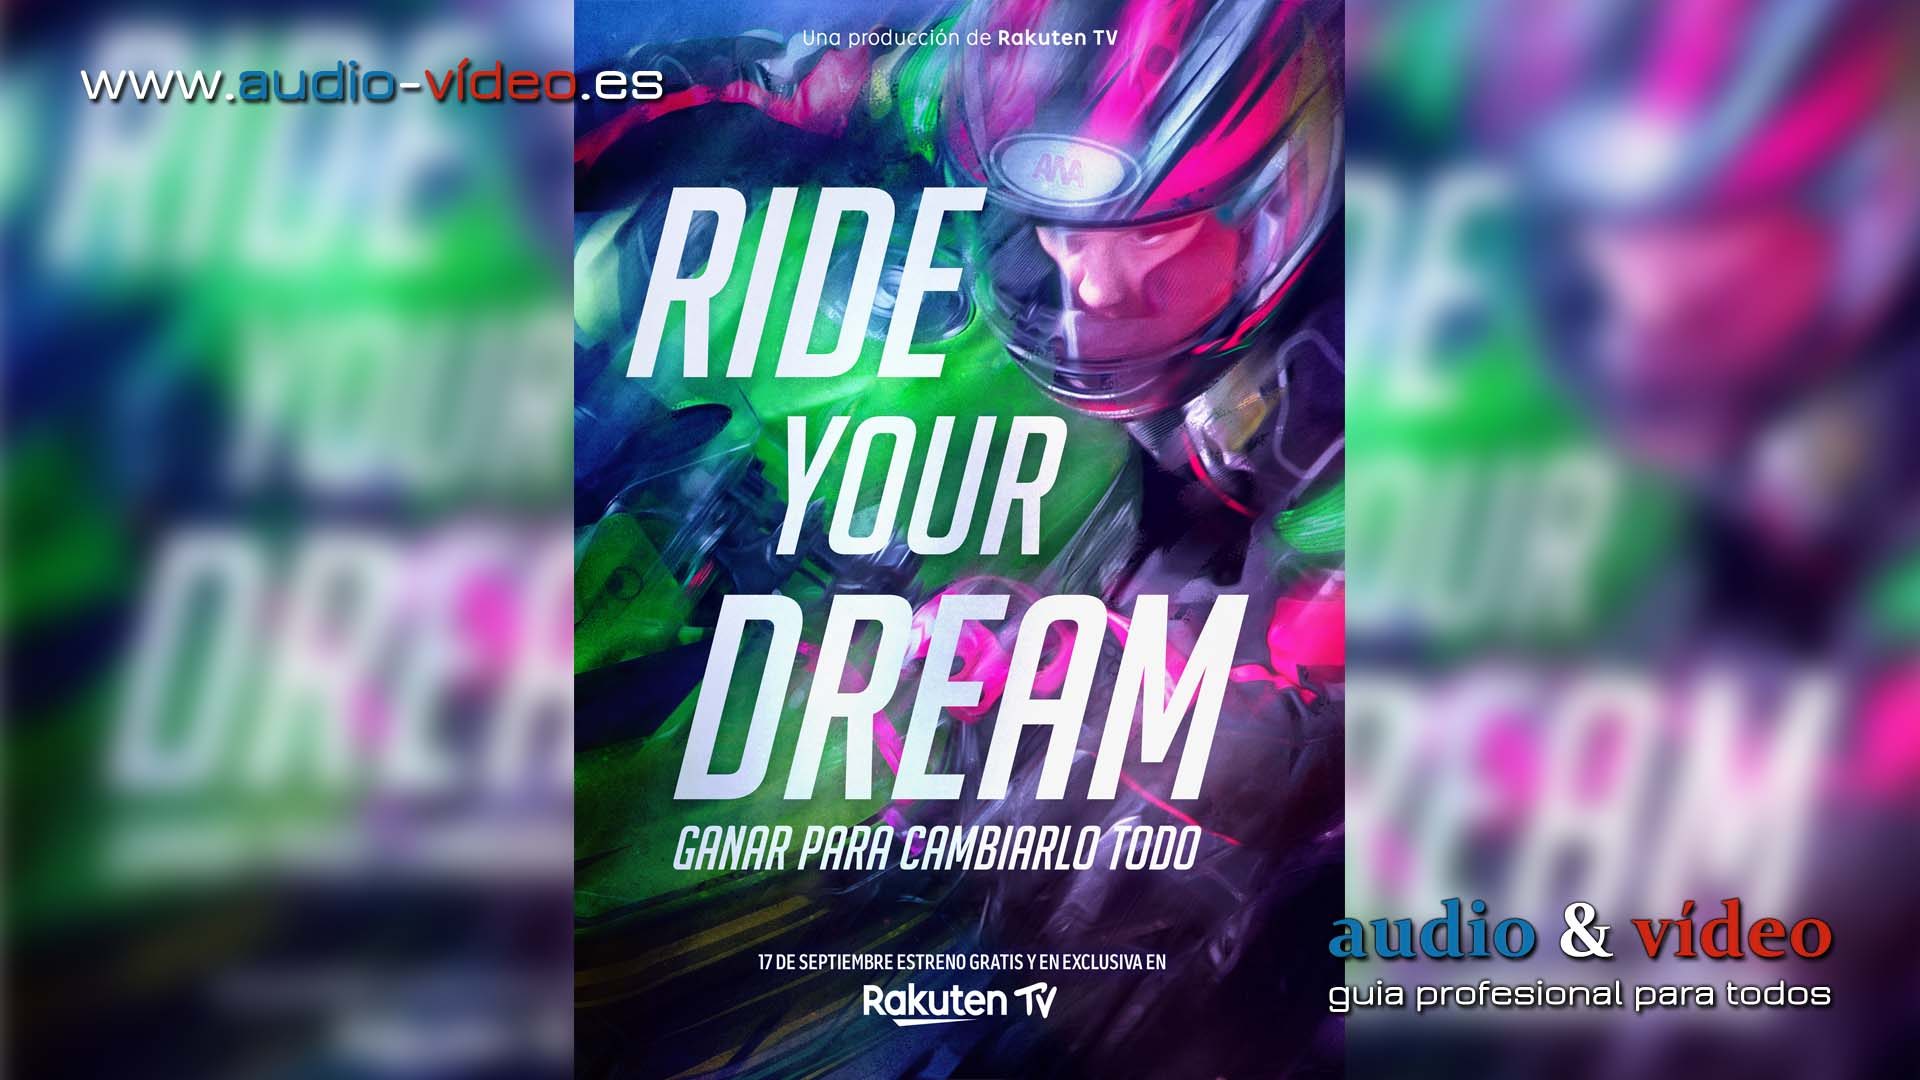 Rakuten TV estrena “Ride your dream”, el documental sobre la campeona mundial  de Superbikes Ana Carrasco